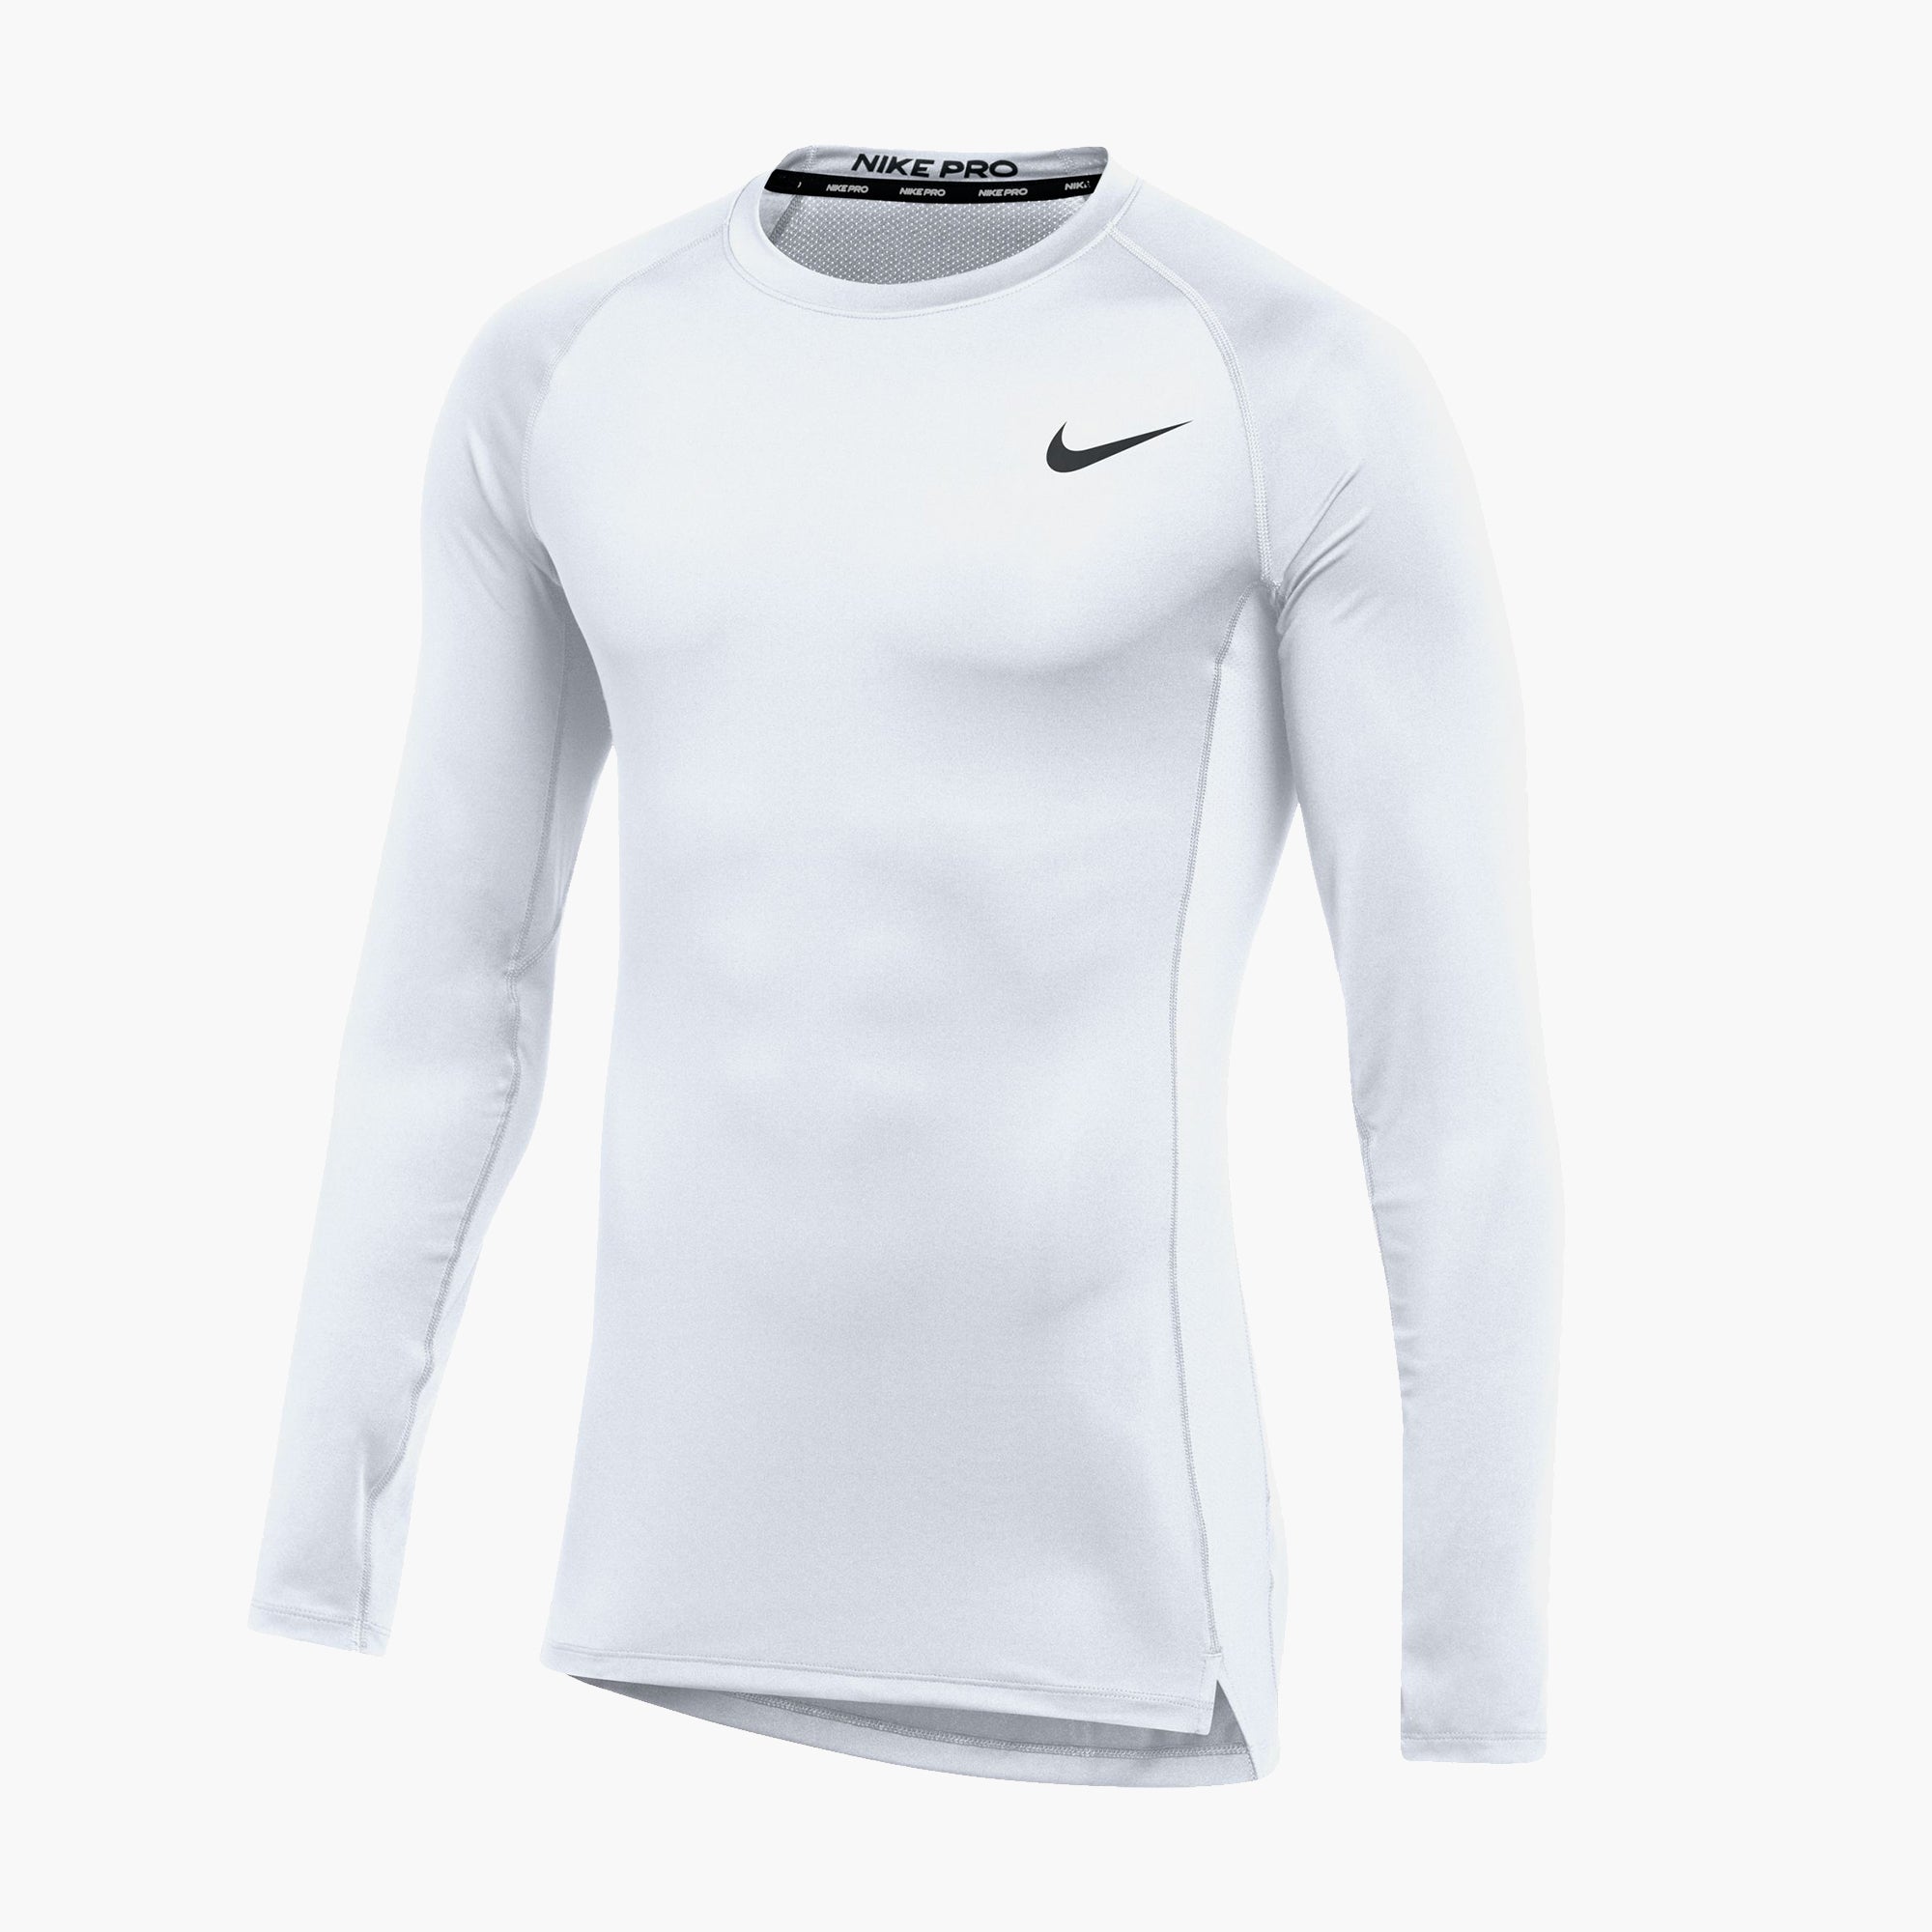 Ordenanza del gobierno desaparecer Un evento Nike Pro Tight Long Sleeve Base Layer Compression Shirt Men's